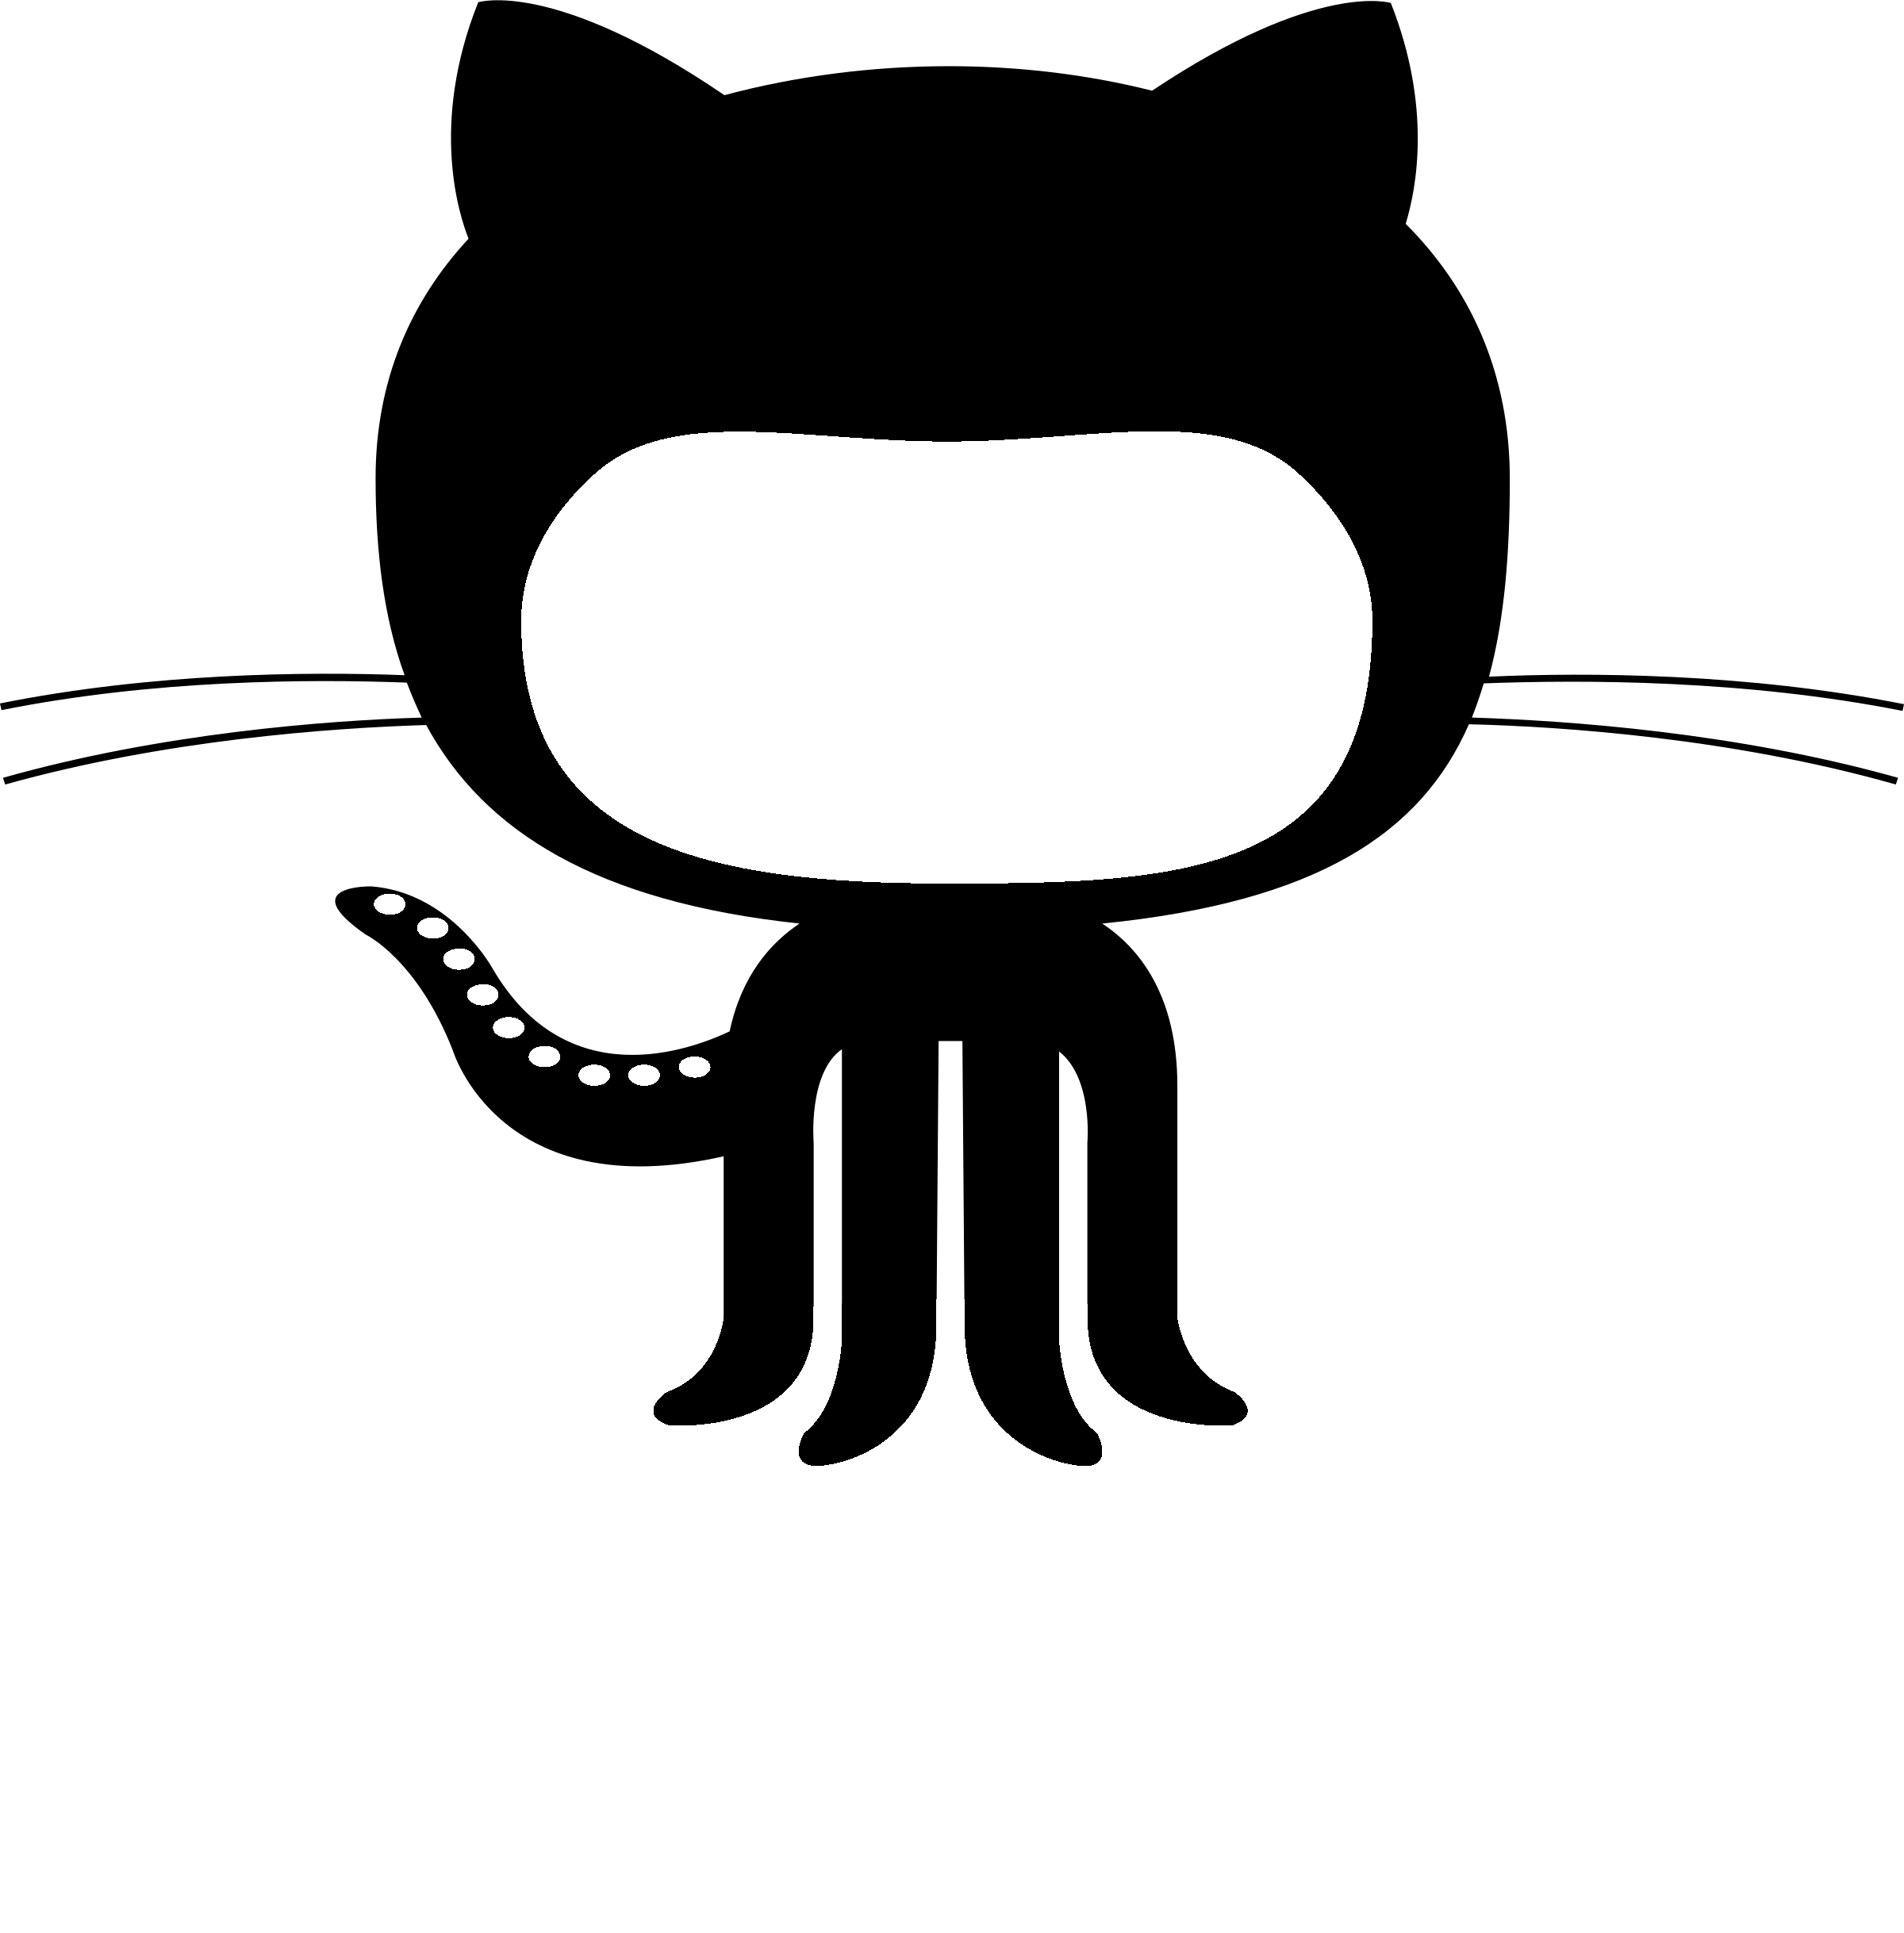 Github Logo PNG Image Transparent Background